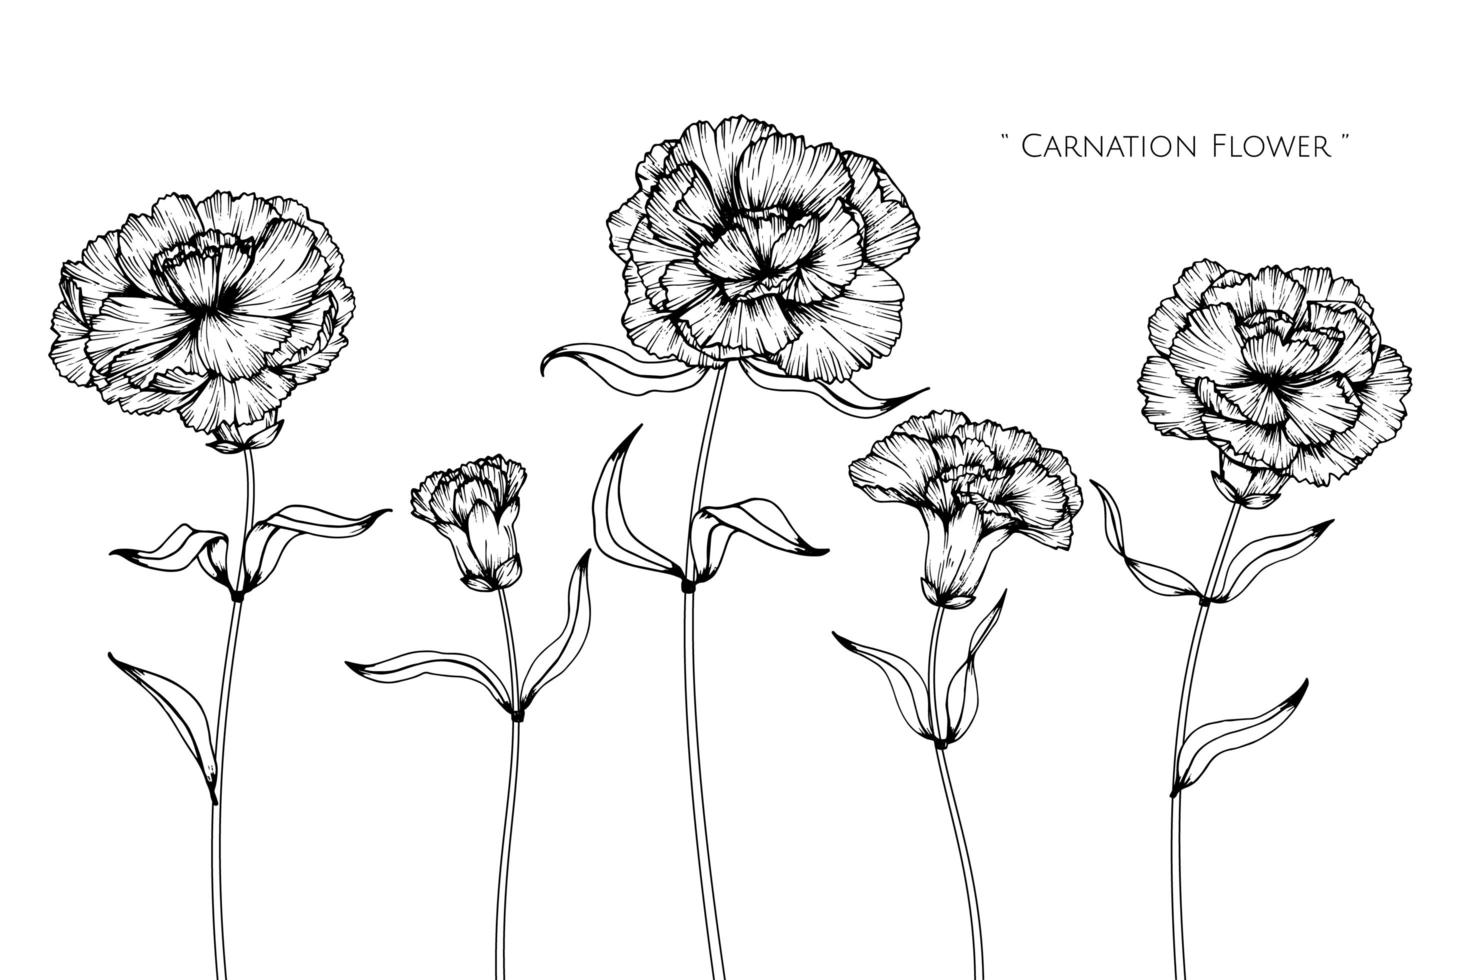 Carnation Flower and Leaf Hand Drawn Designs vector